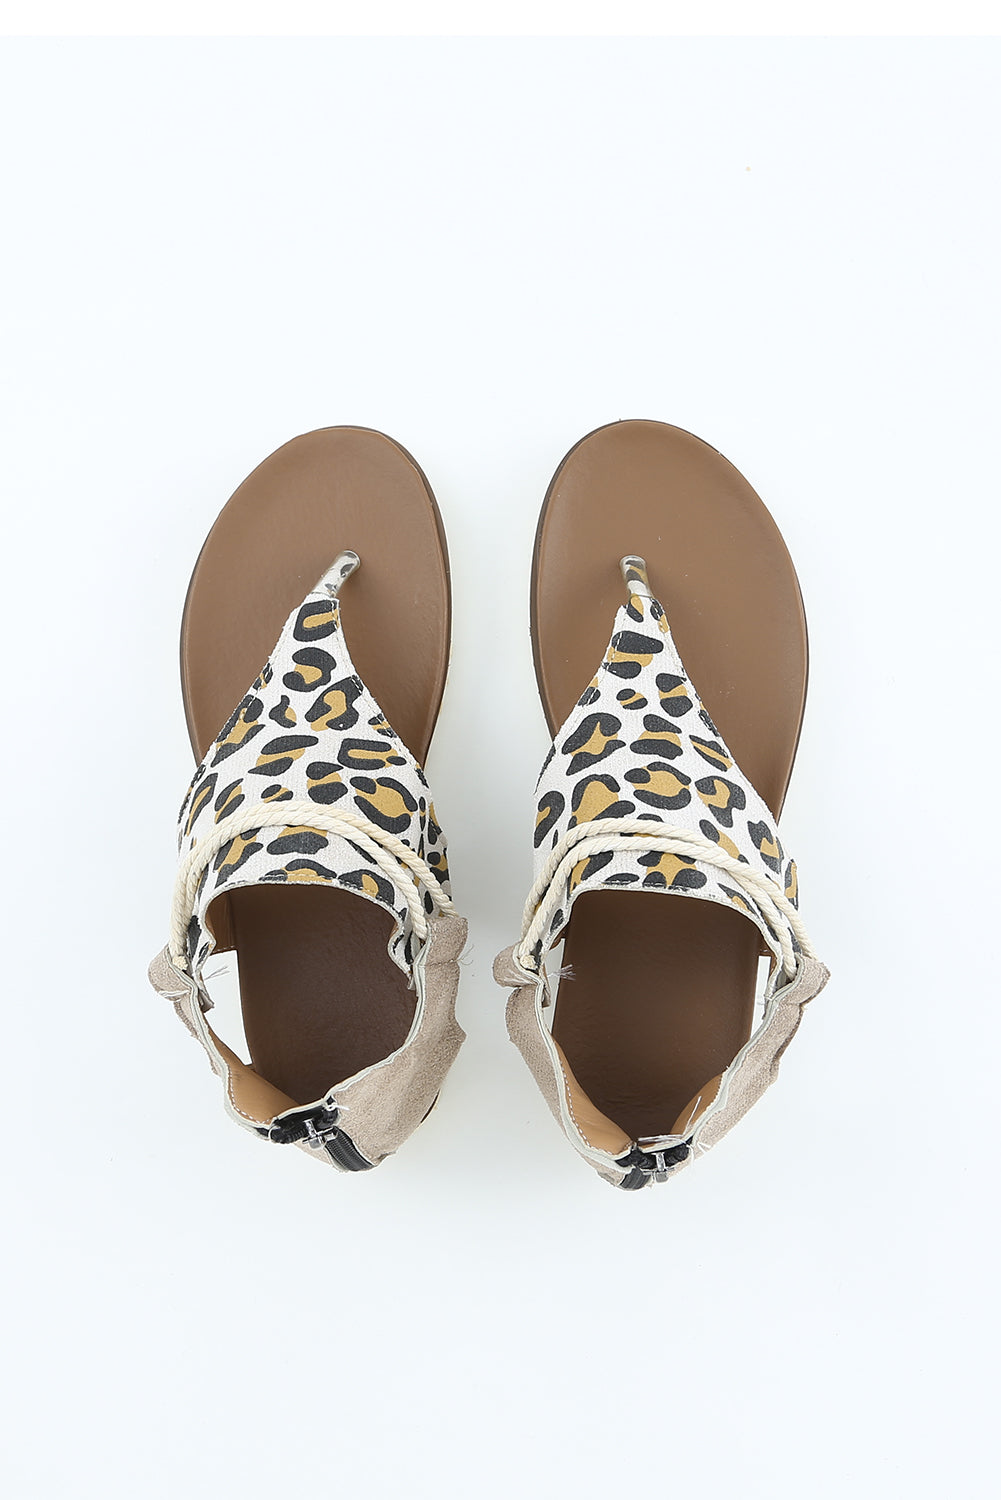 Western Leopard Print Criss Cross Zipper Back Flat Sandals